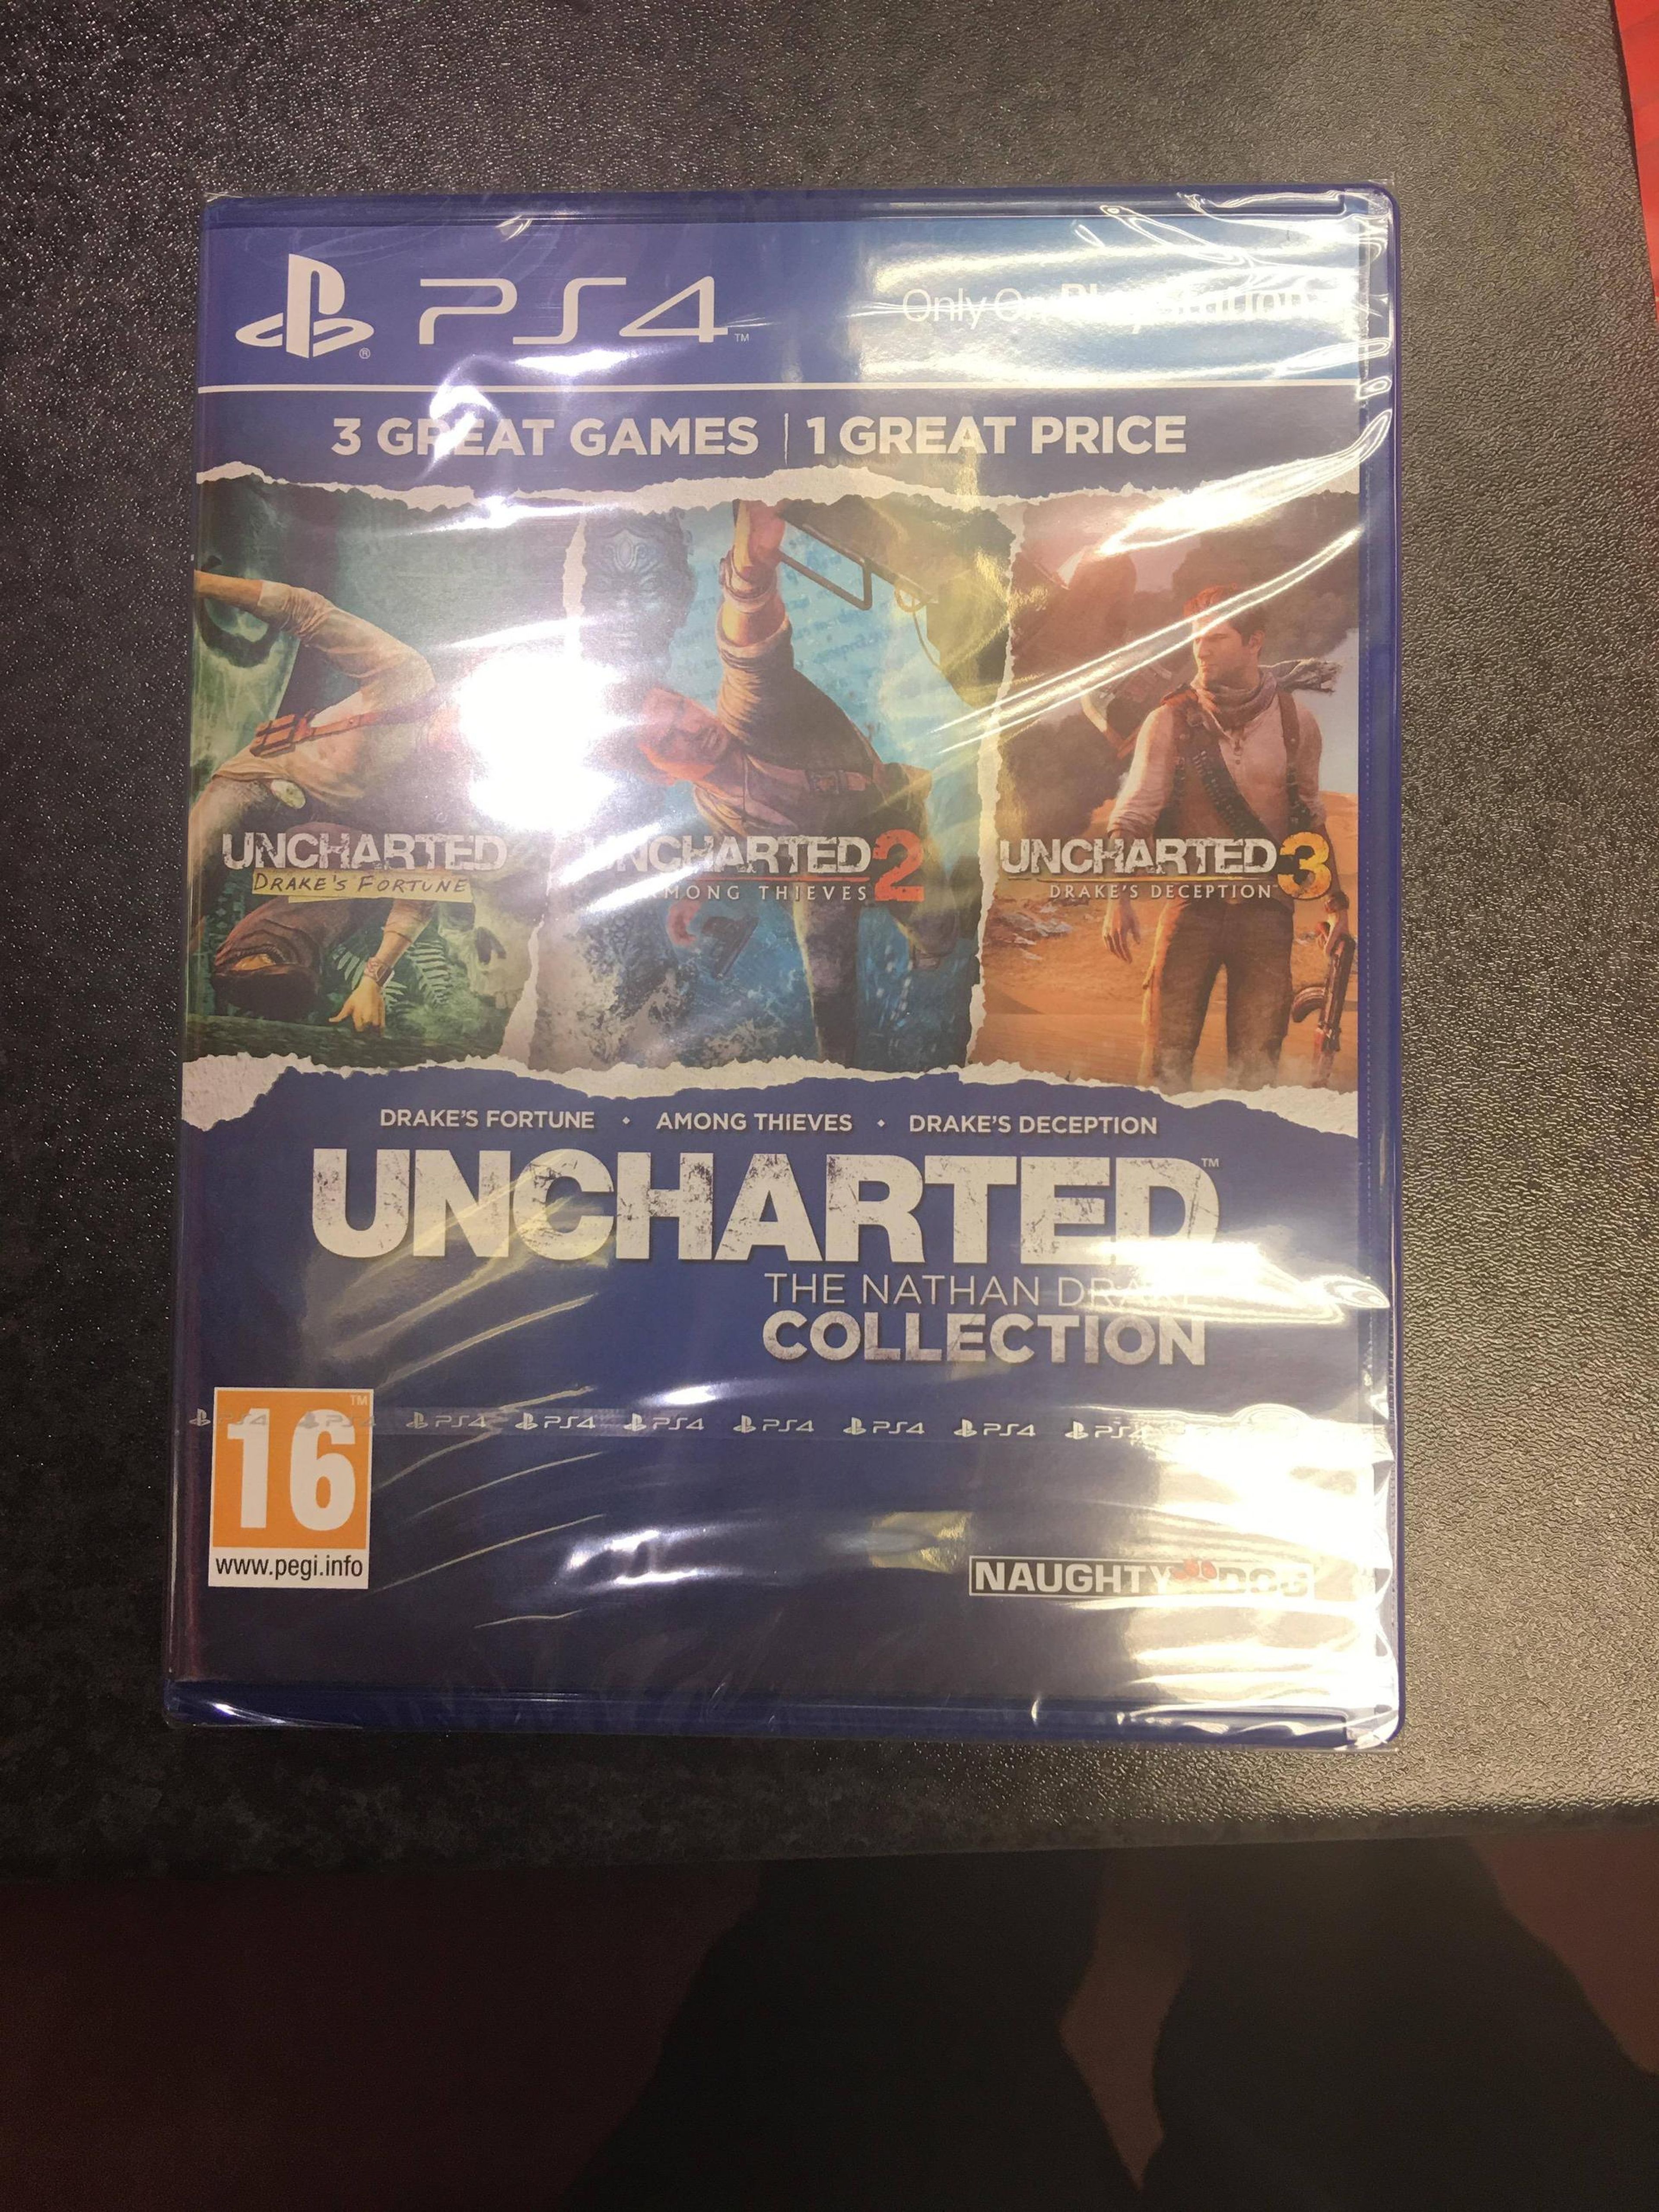 Uncharted The Nathan Drake Collection para PS4 tiene nueva carátula